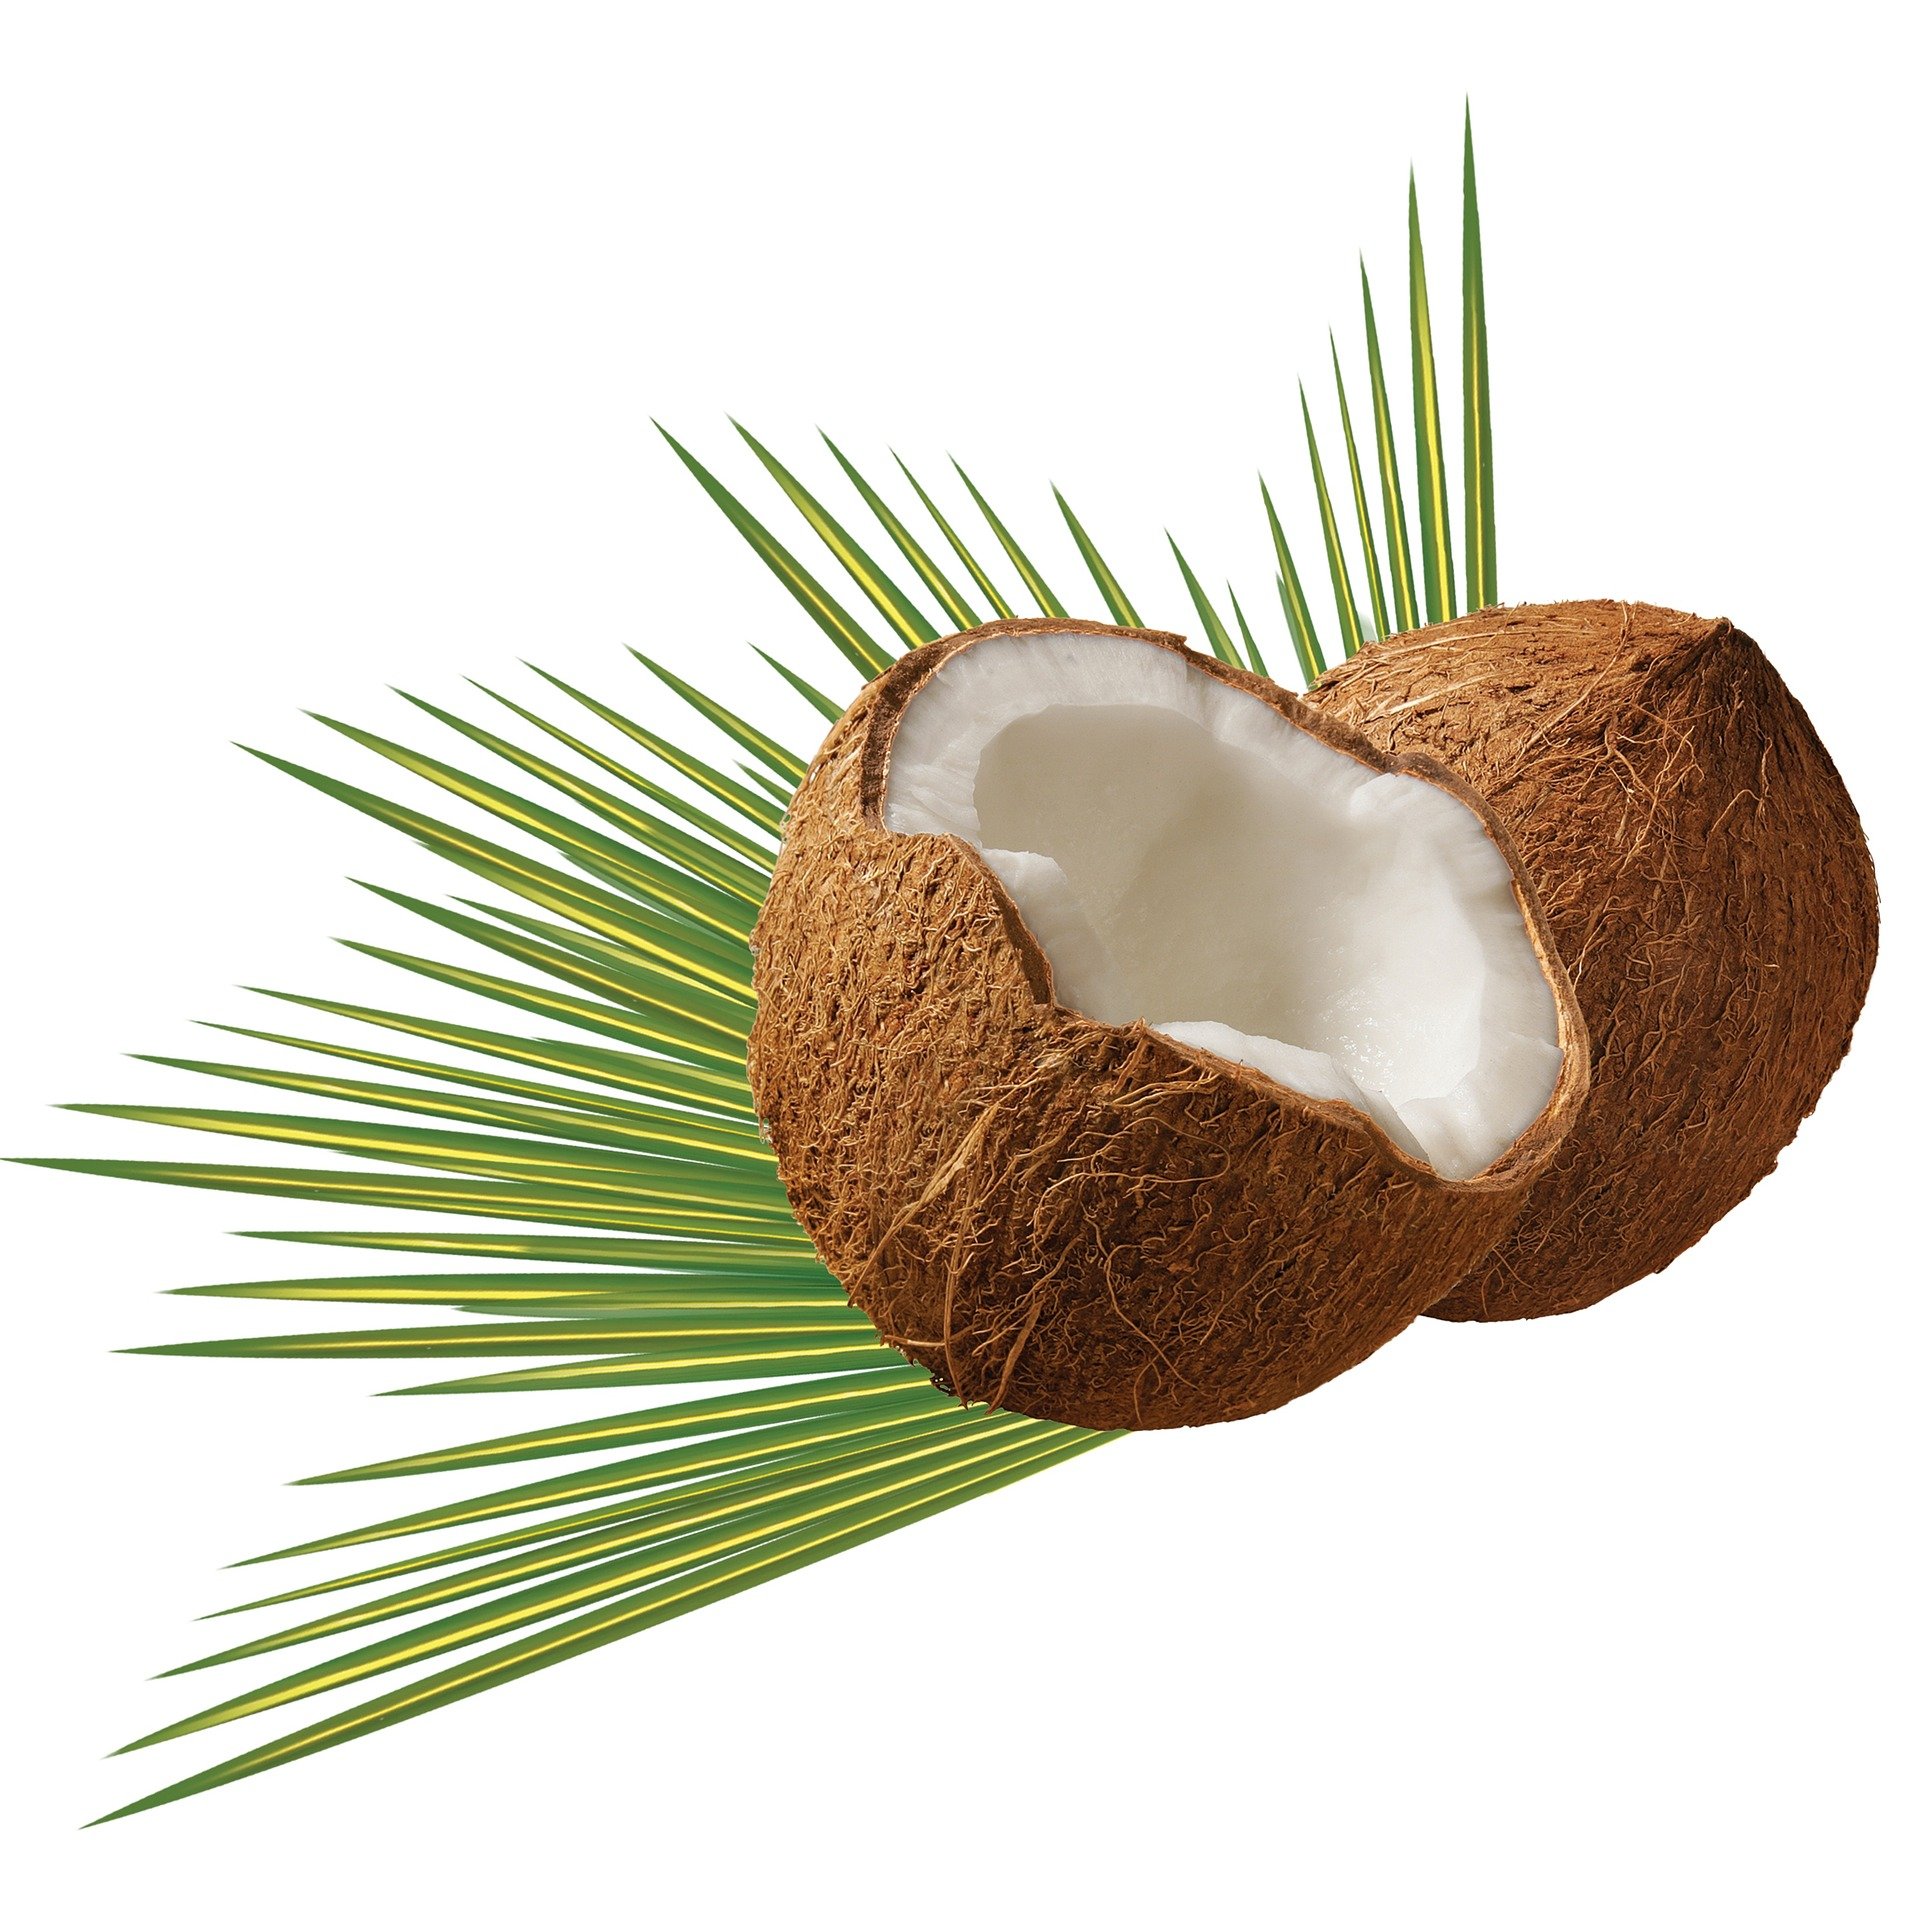 coconut-979858_1920